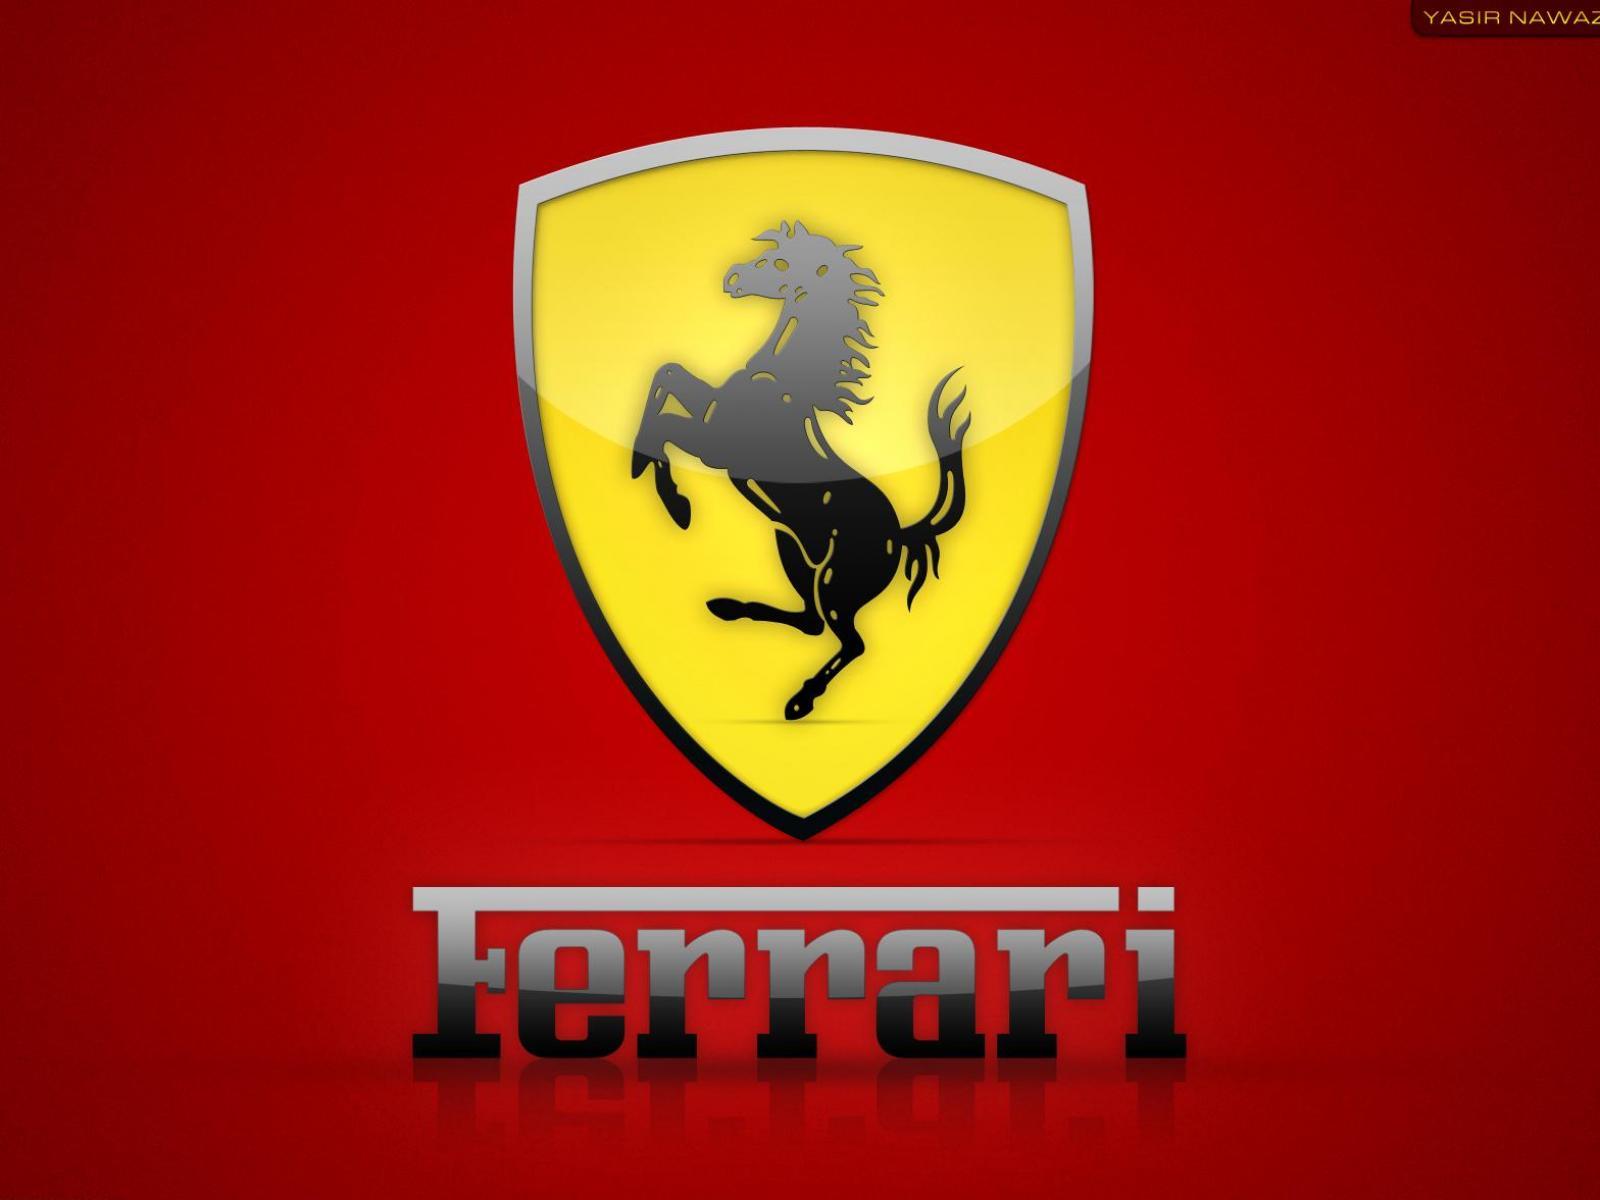 Ferrari Logo 71 44022 Image HD Wallpaper. Wallfoy.com